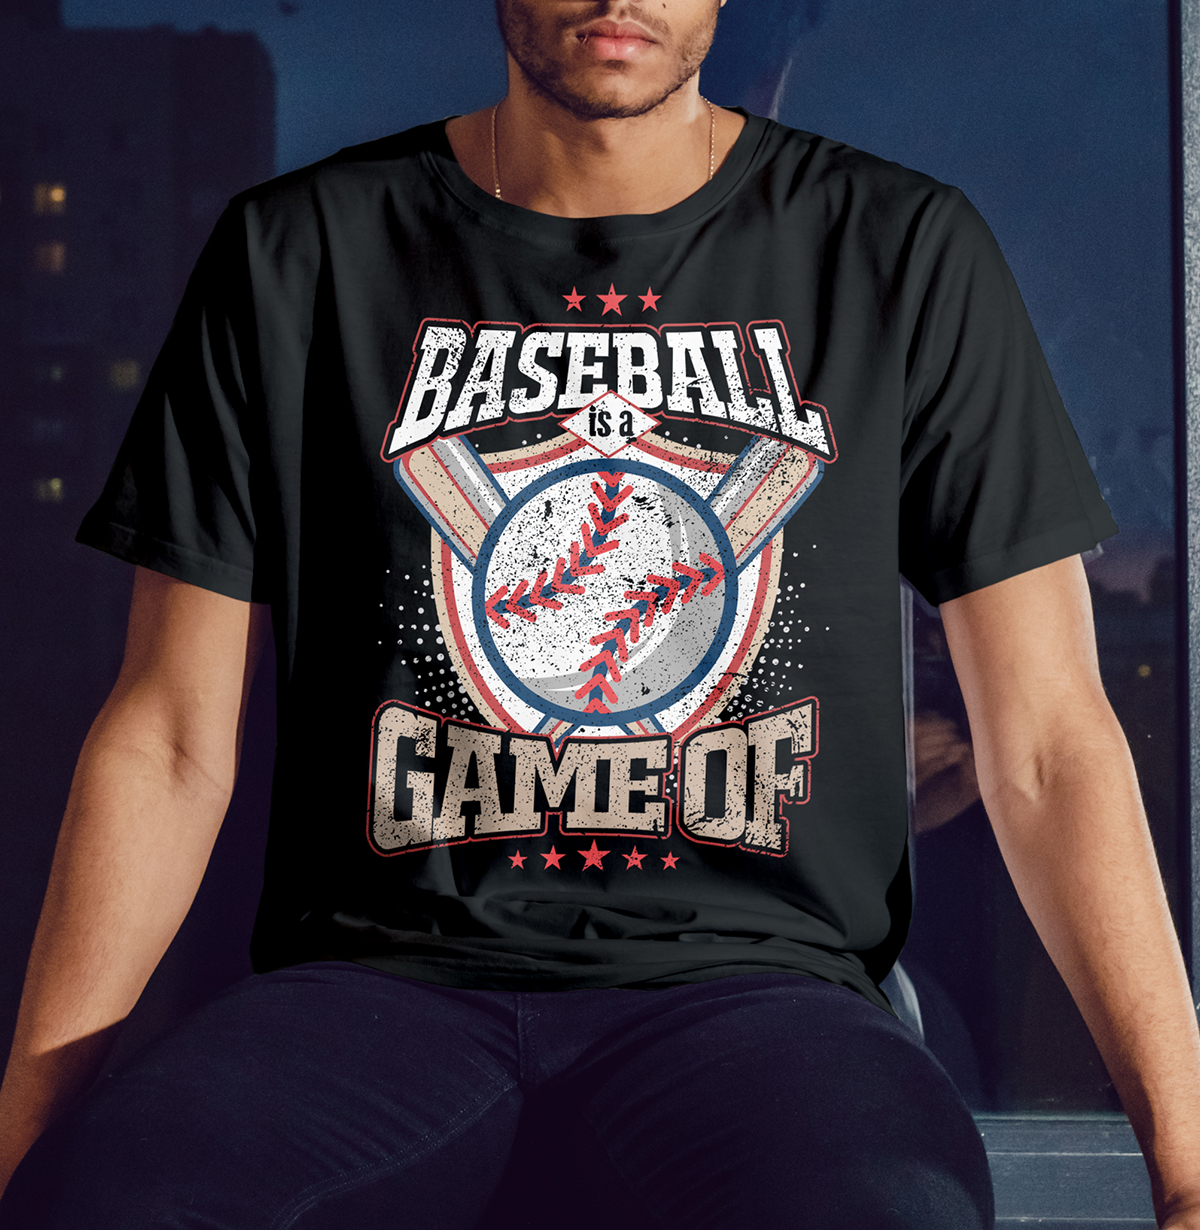 USA baseball t-shirt design vector by khalid